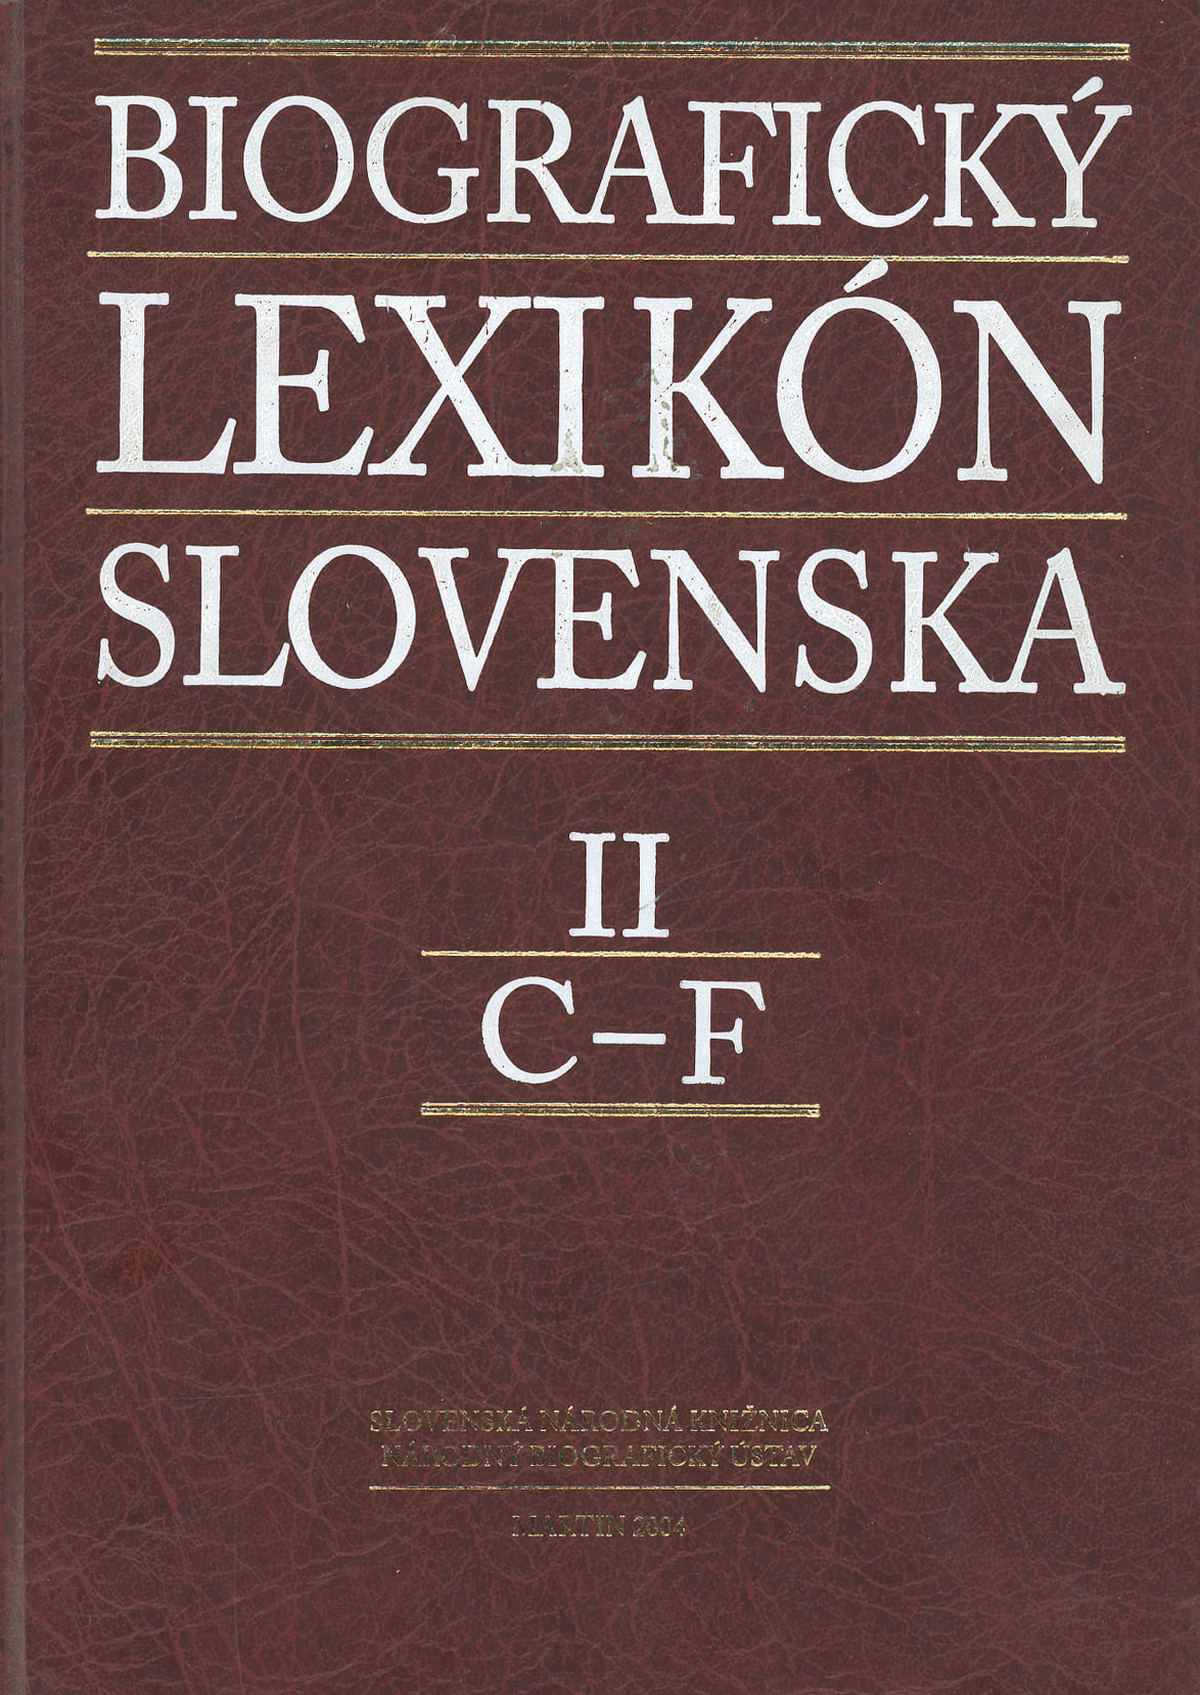 Biografický lexikón Slovenska II. (C - F)